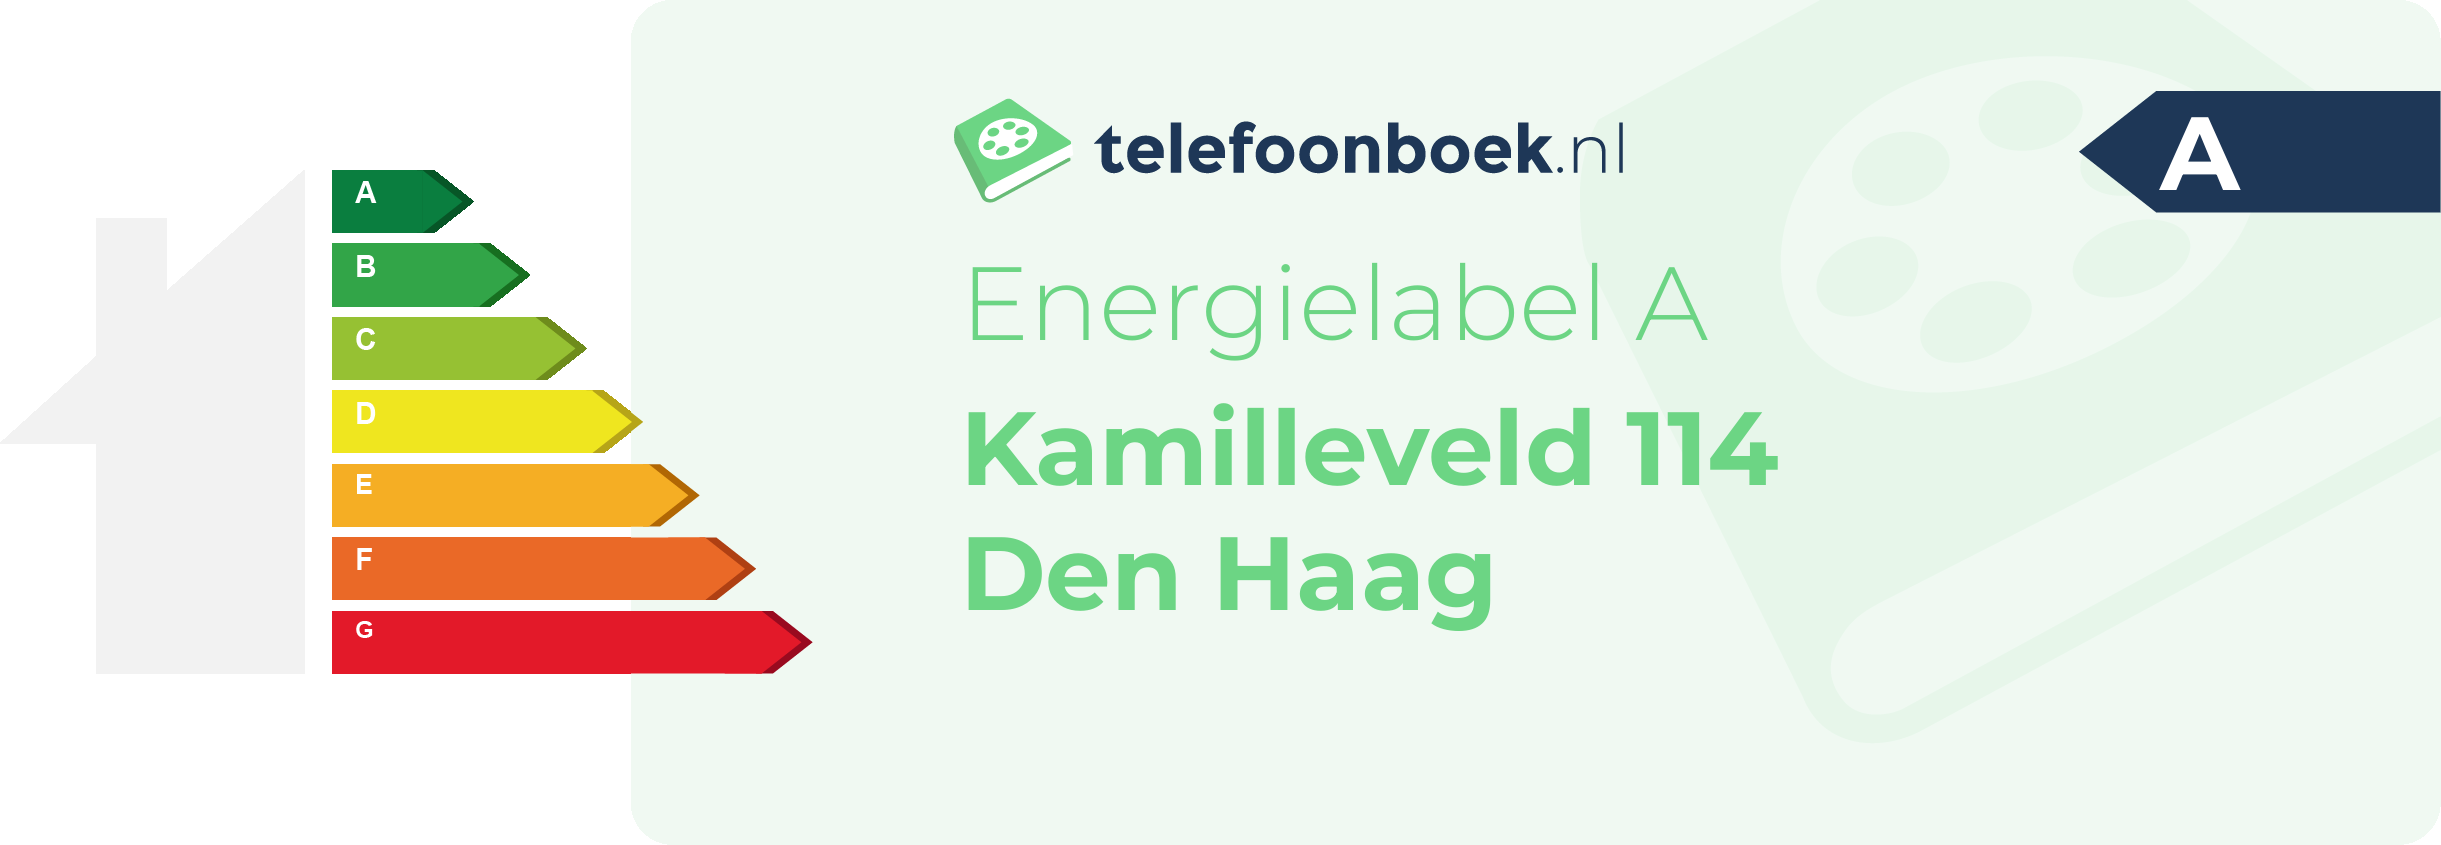 Energielabel Kamilleveld 114 Den Haag